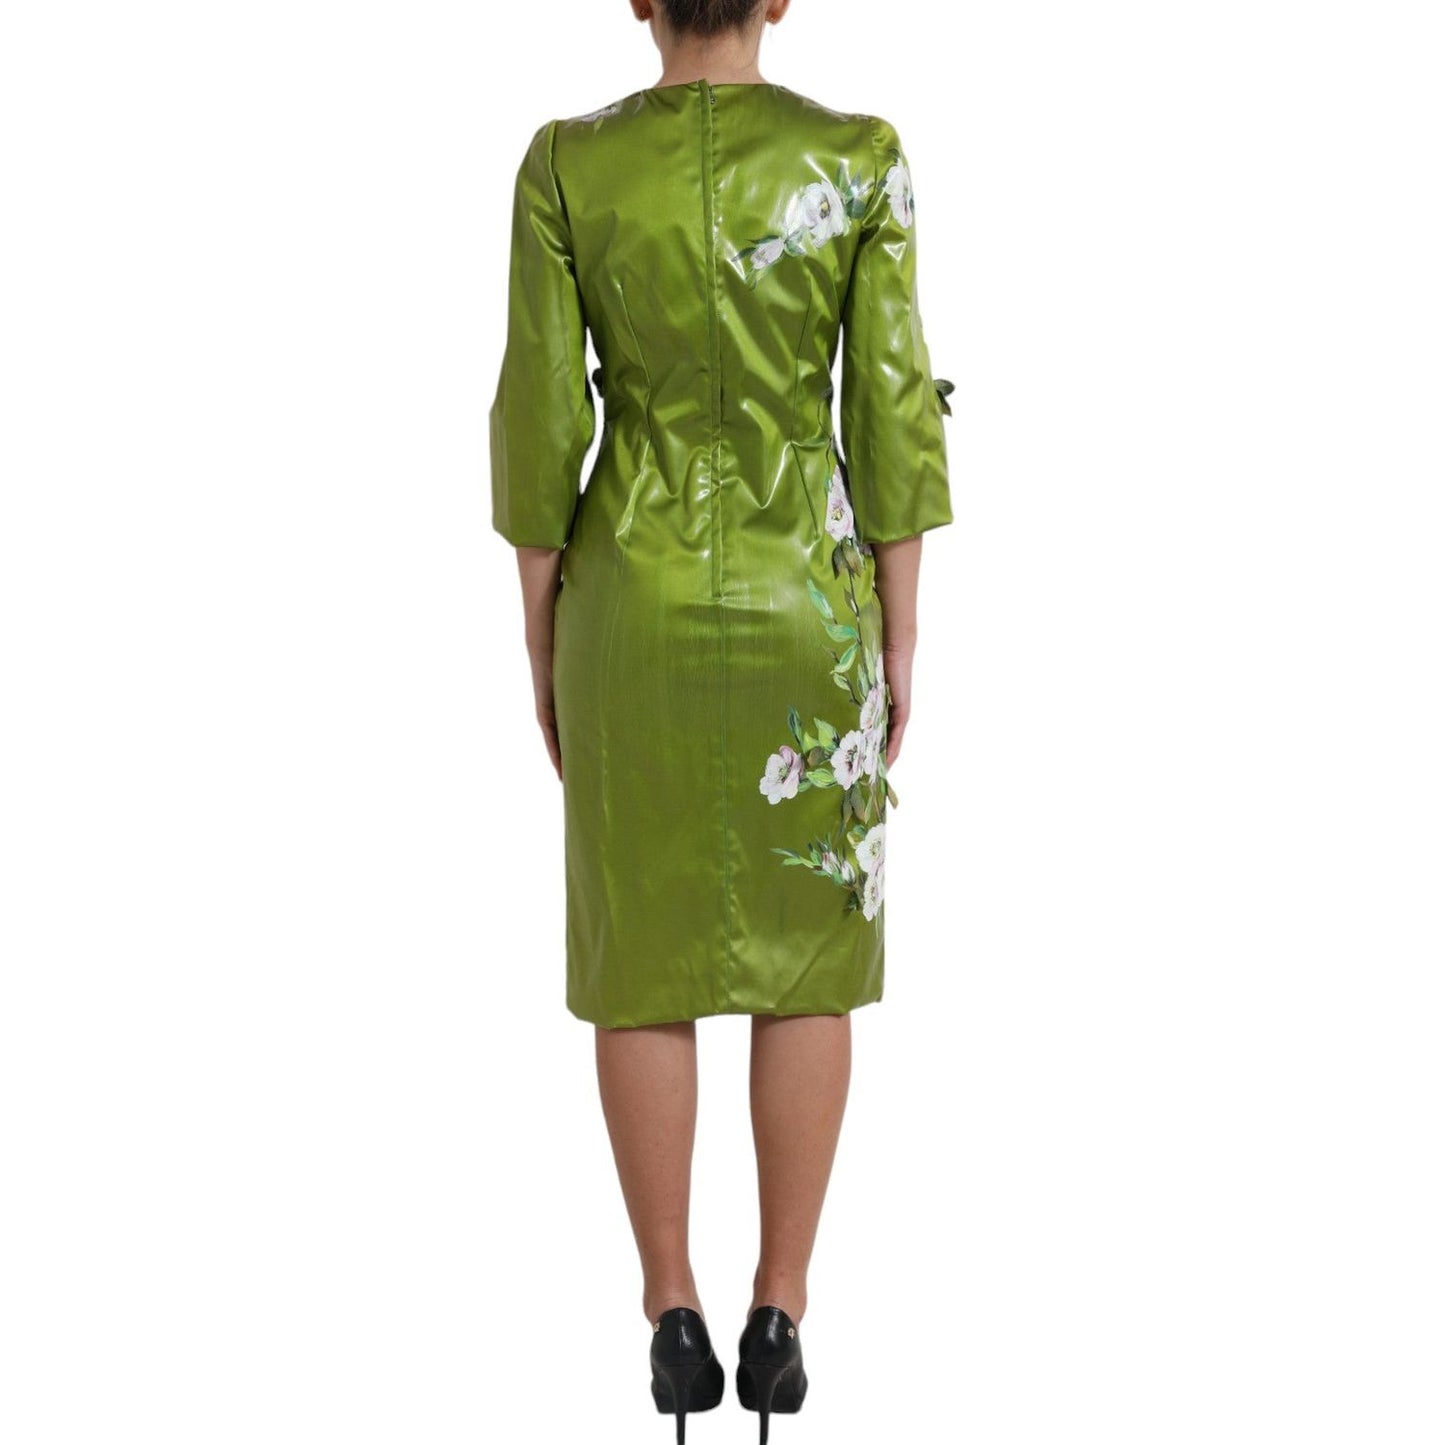 Dolce & Gabbana Floral Elegance Midi Sheath Dress WOMAN DRESSES green-floral-embellished-sheath-midi-dress